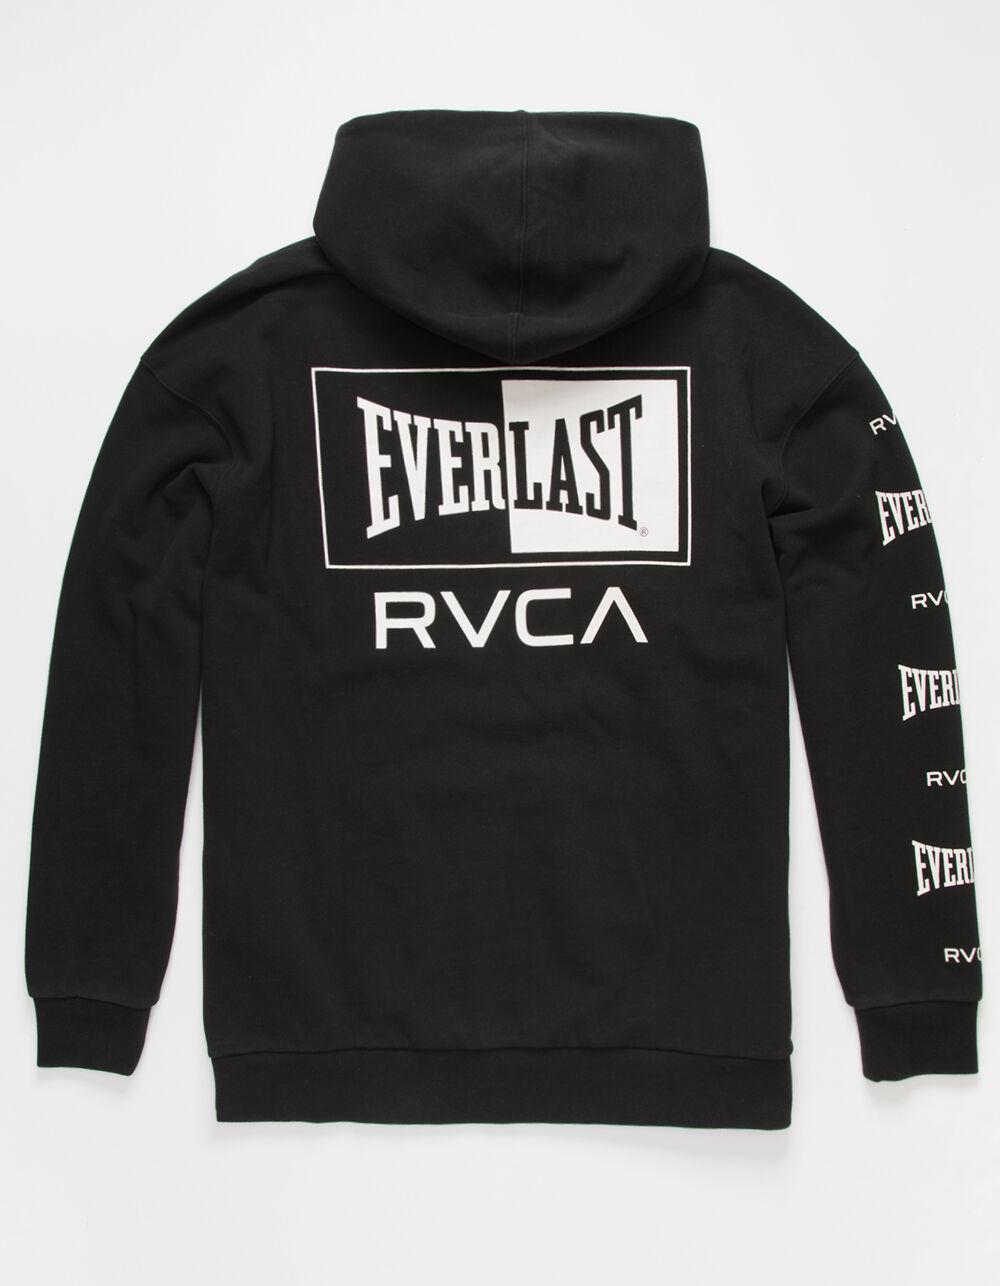 RVCA x Everlast Sport Mens Black Hoodie